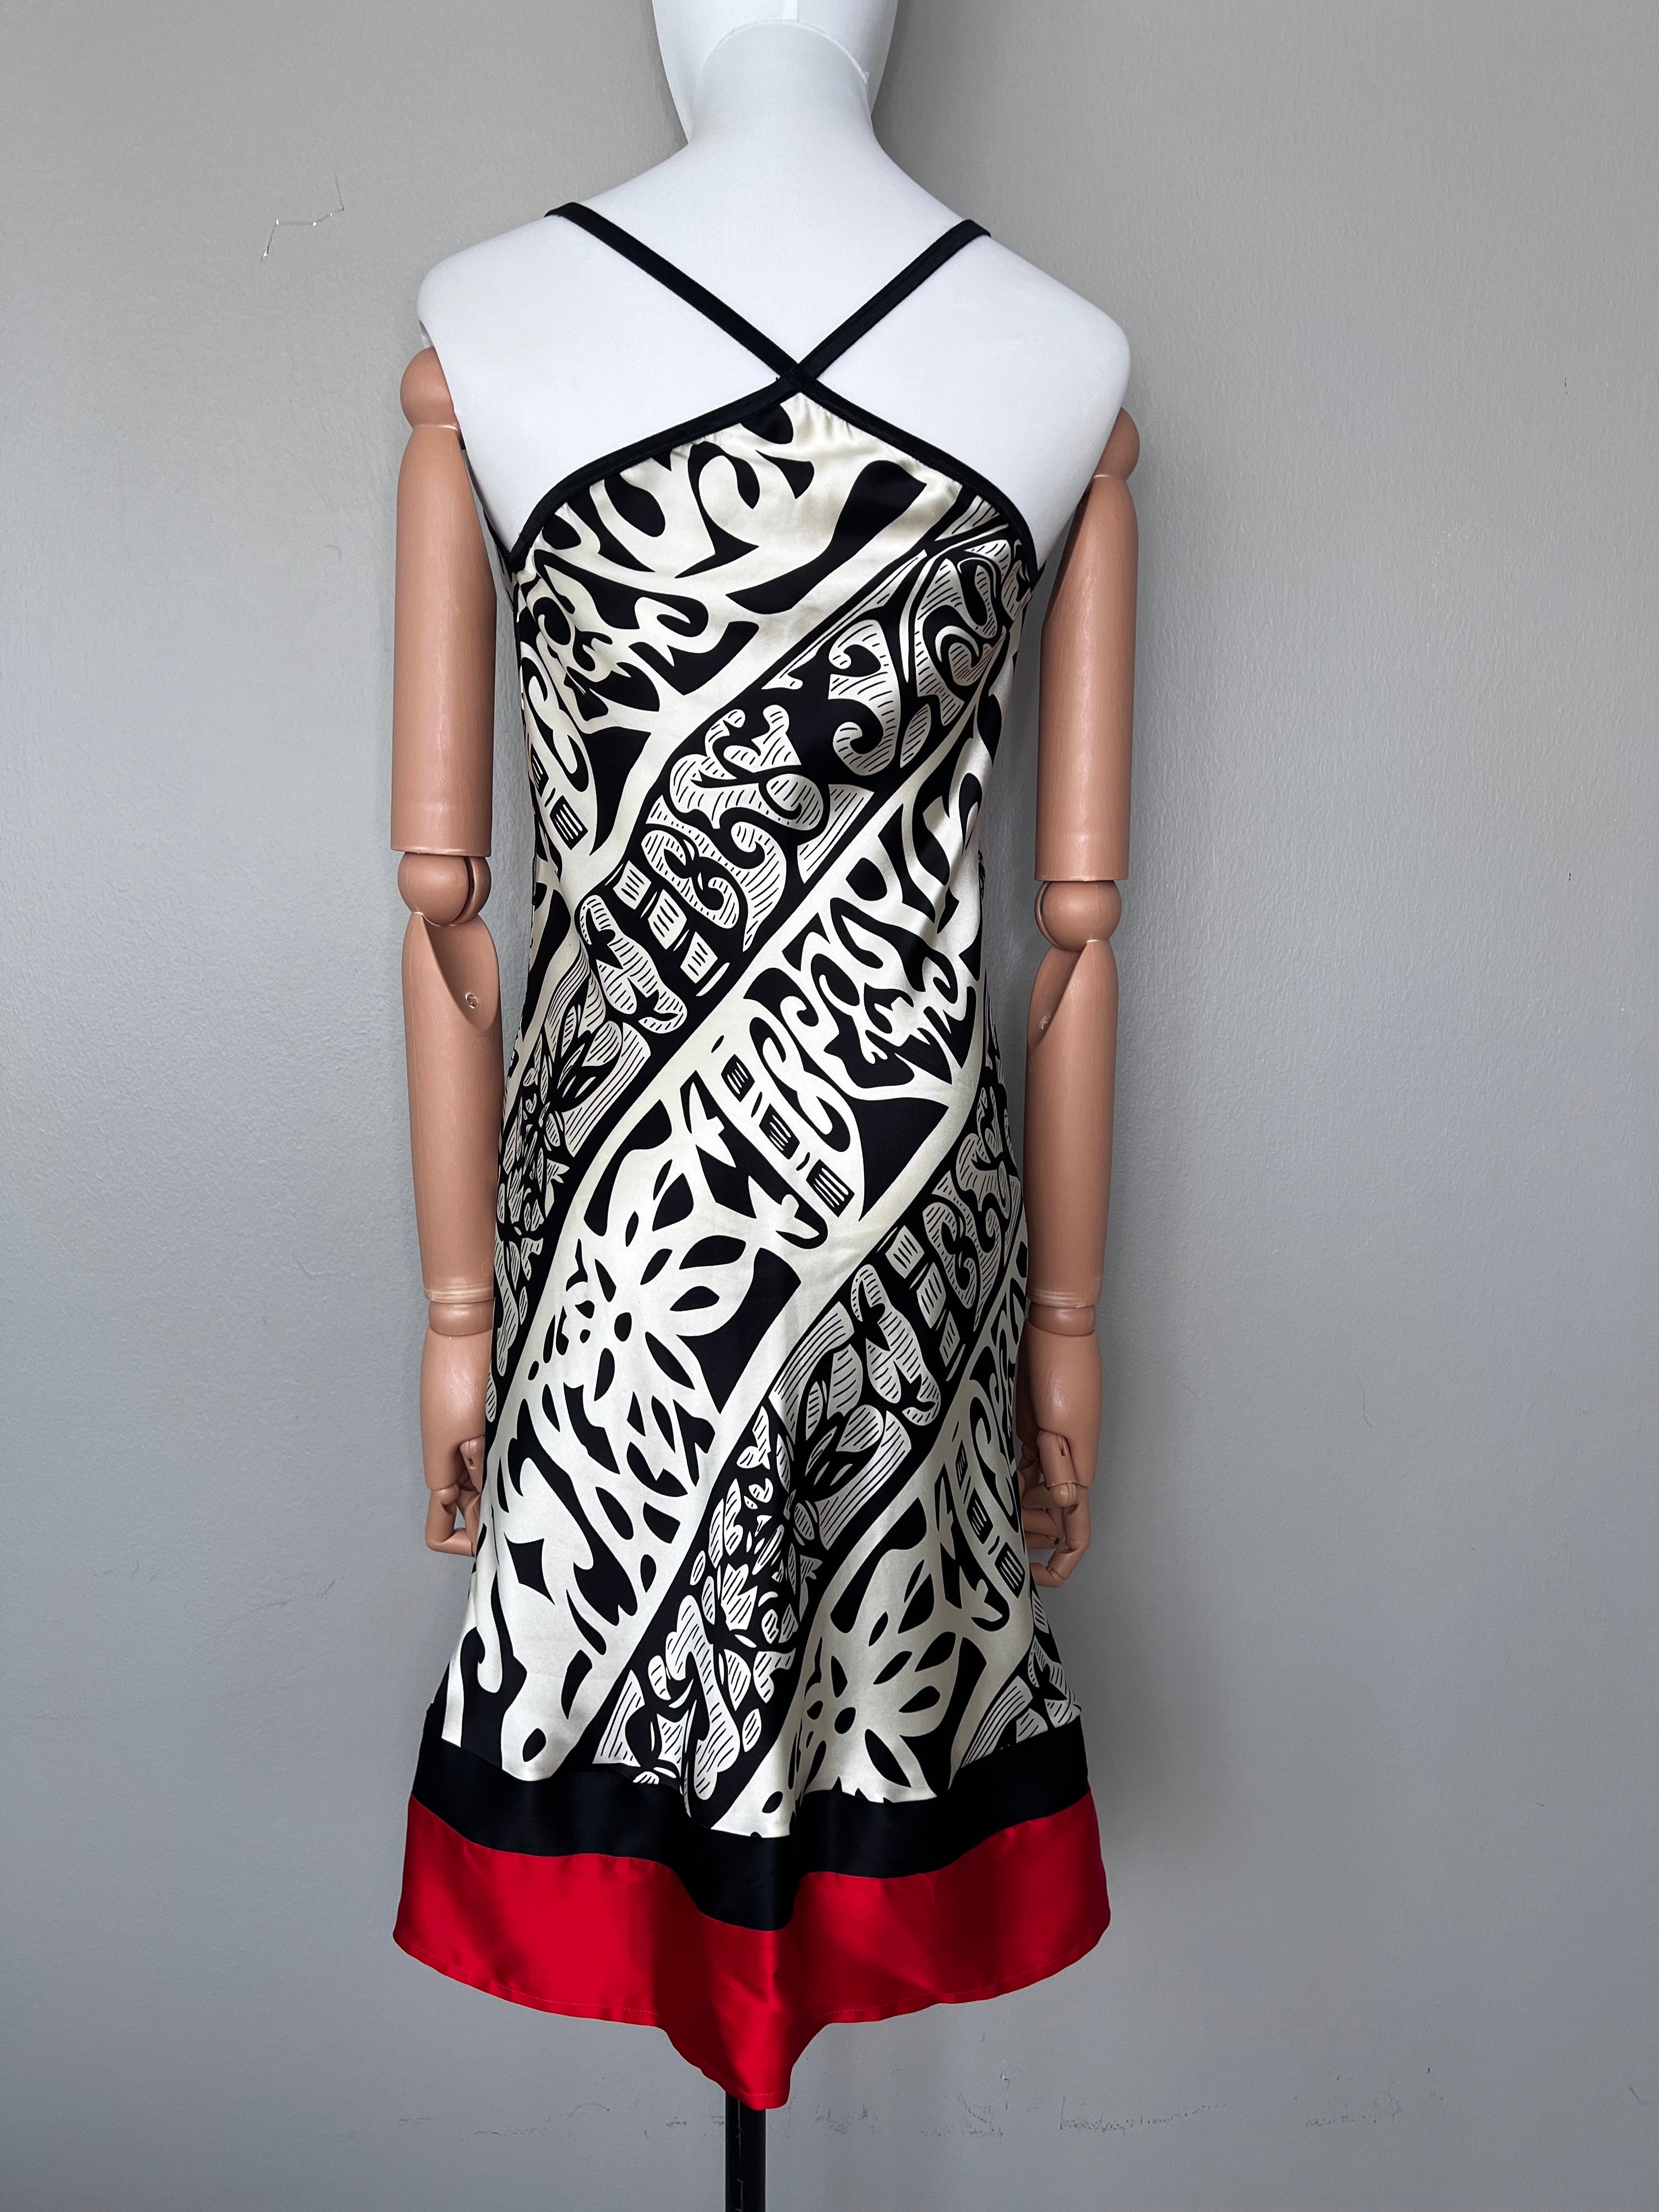 B&W pattern design with red accents silk slip on dress - BEDO